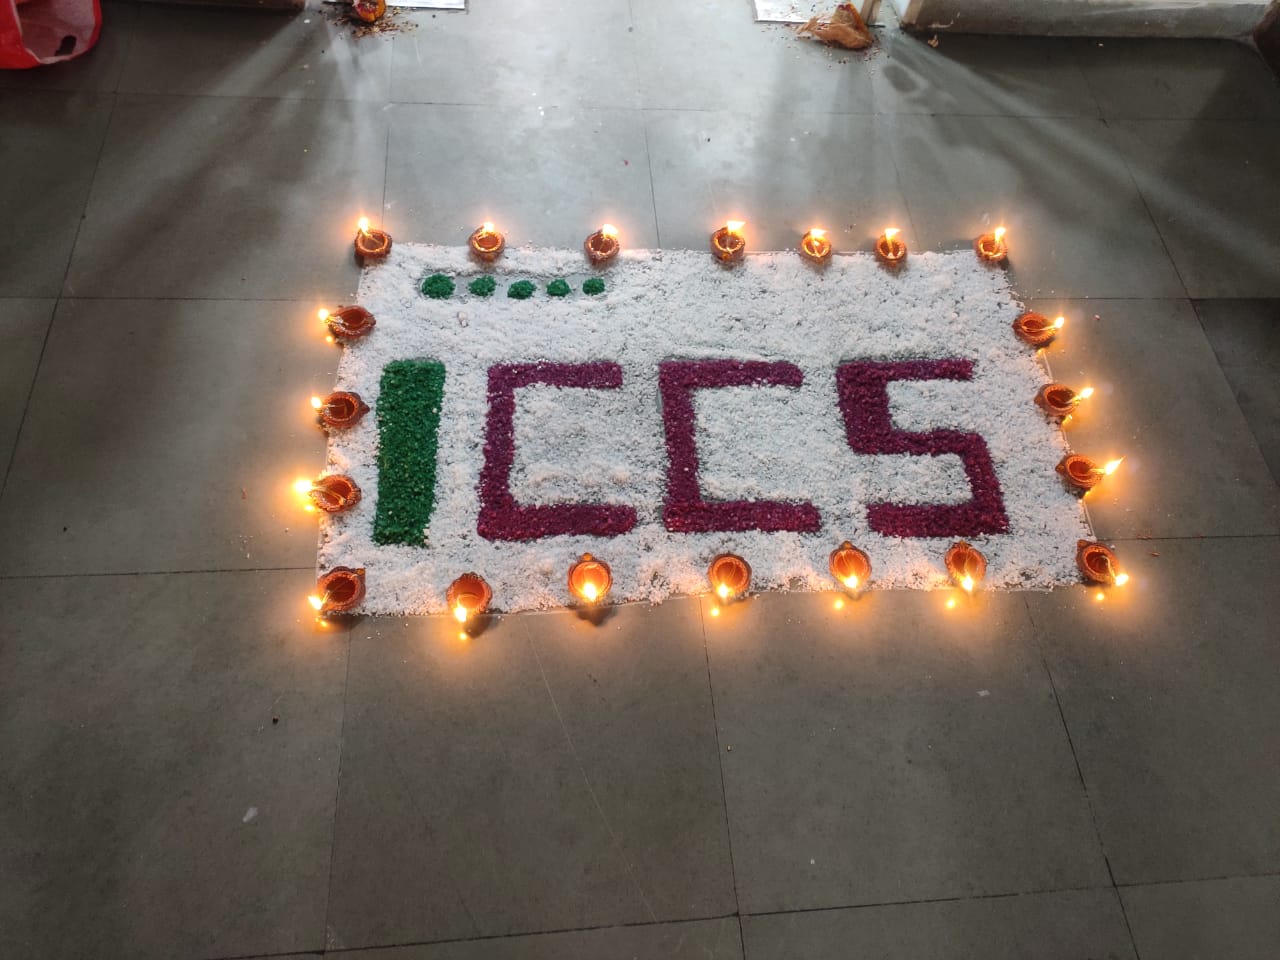 ICCS – NEW SITE IN HYDERABAD